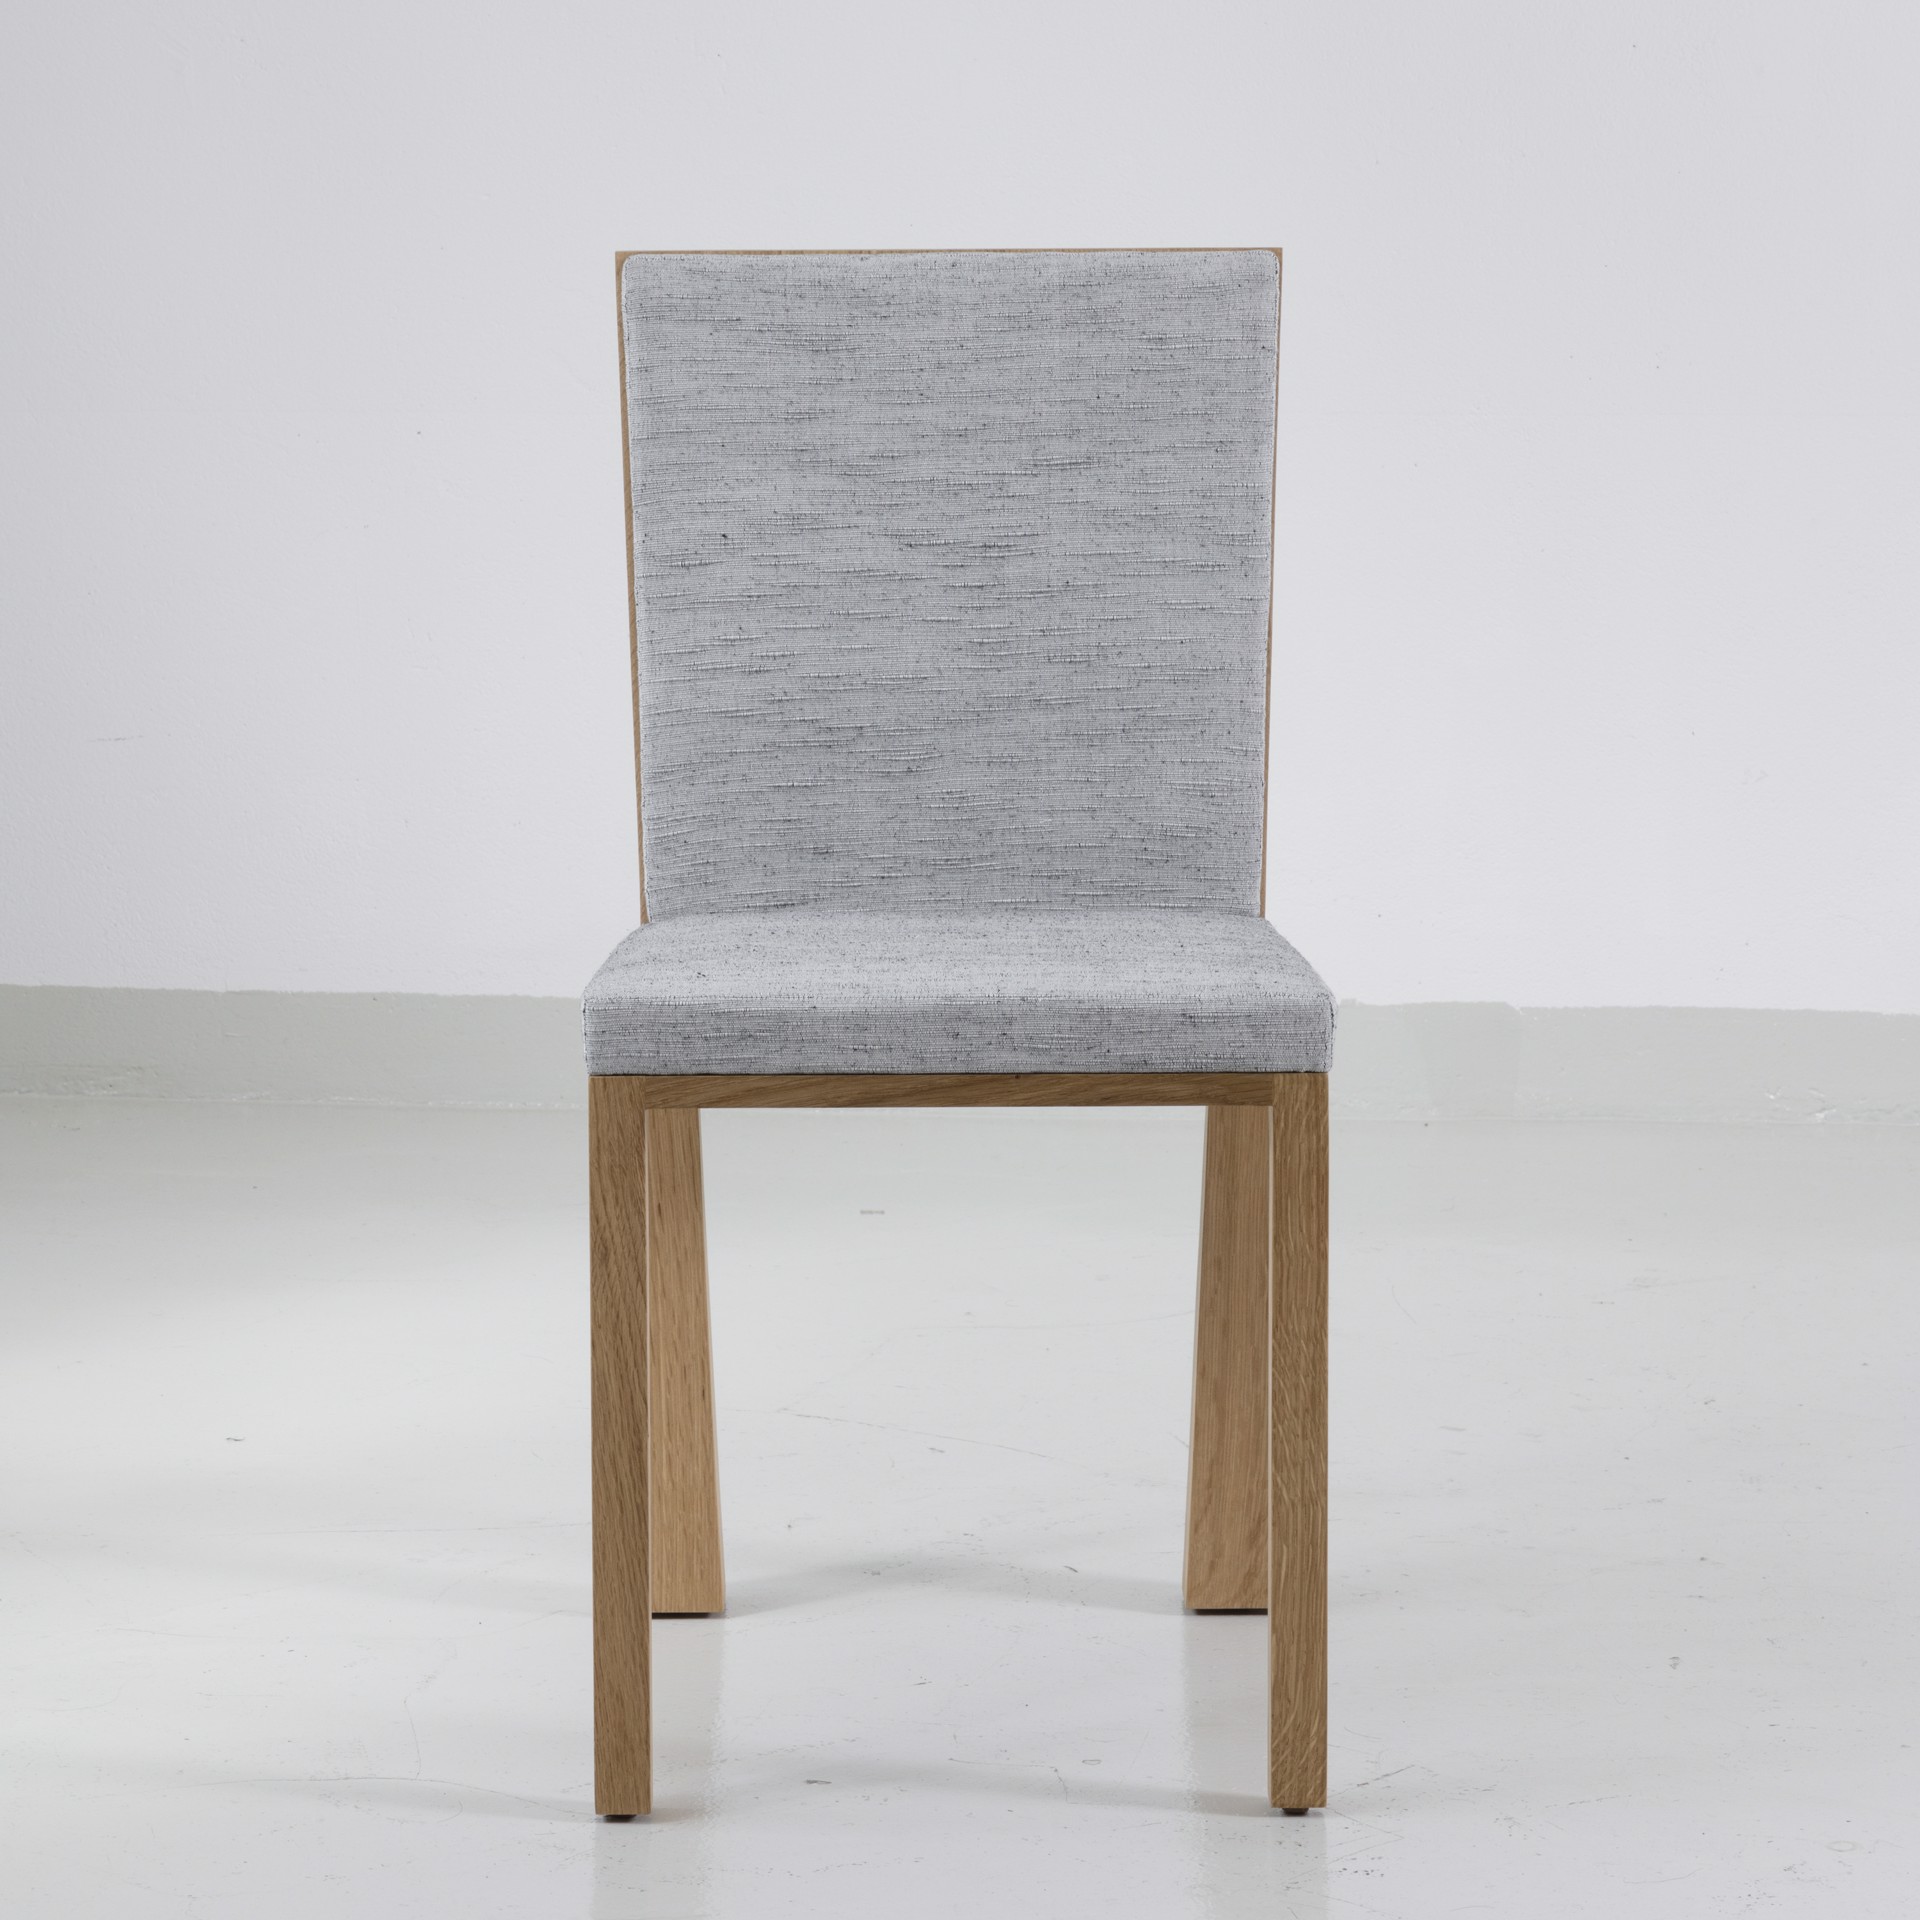 Chair #2 by Tinatin Kilaberidze